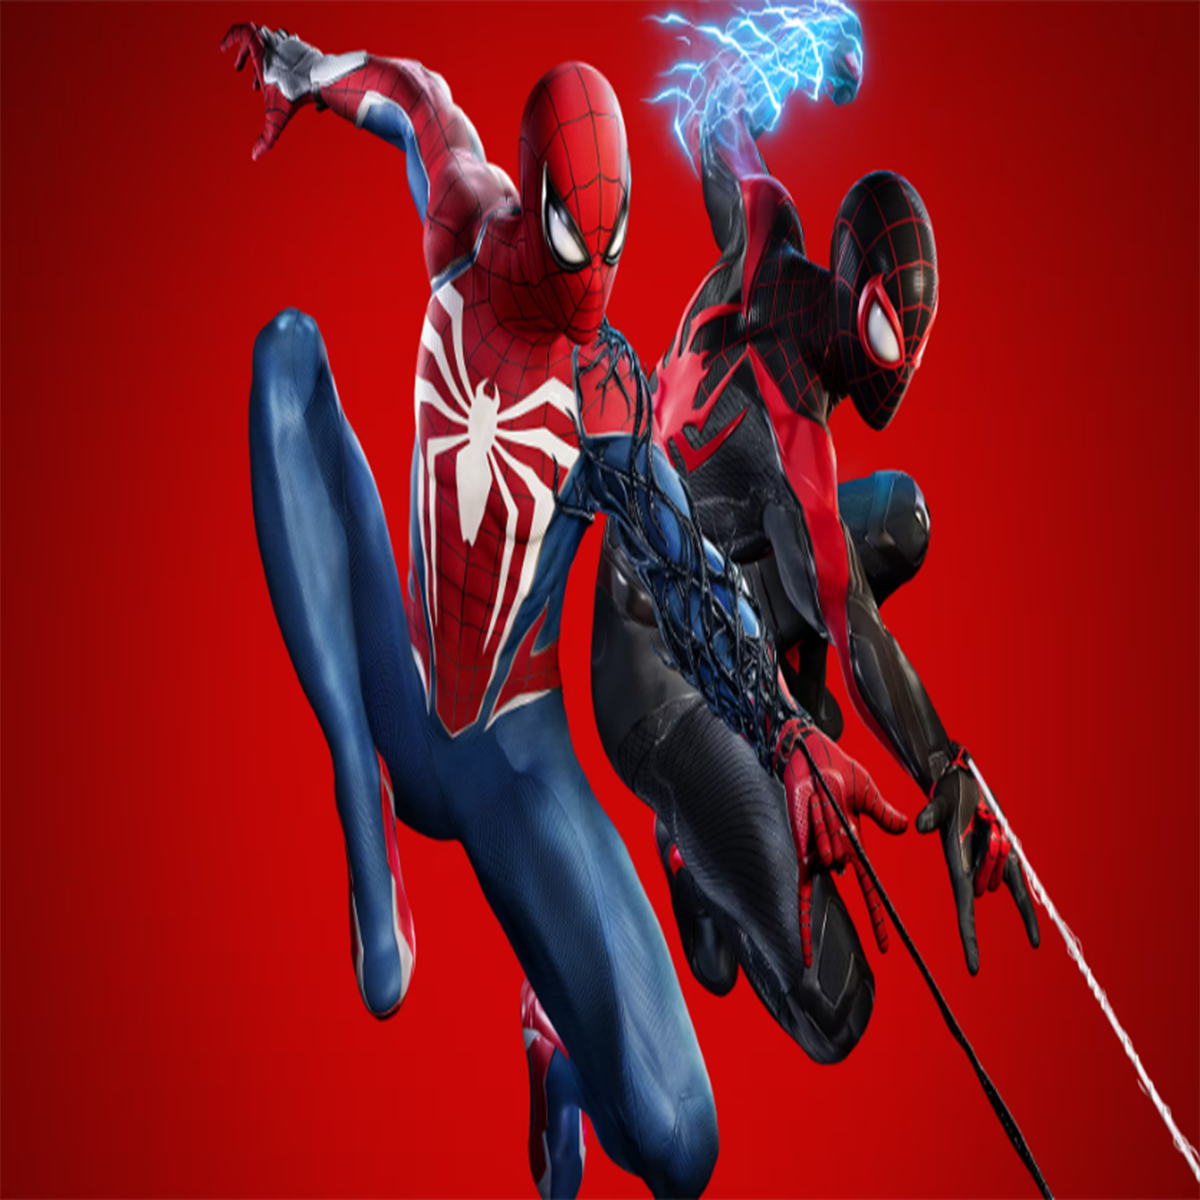 Marvel's Spider-Man PC Mod Finally Adds Amazing Spider-Man 2 Suit